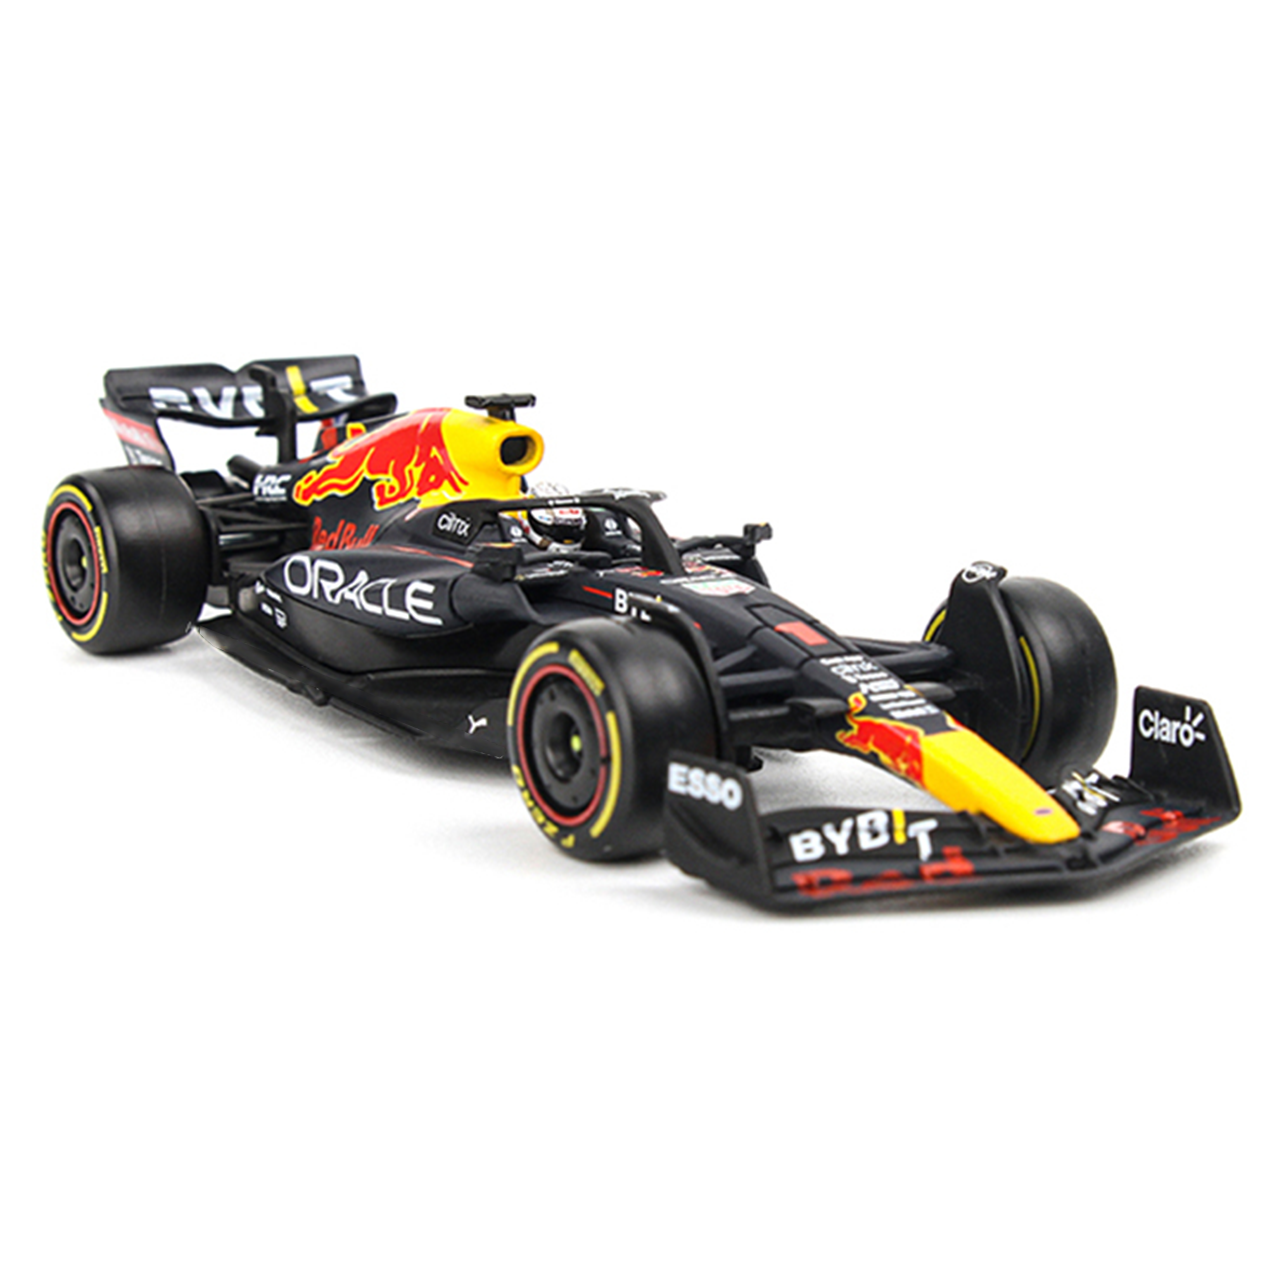 Miniatura RB18 1:43 Oracle Red Bull Racing 2022/2023 - Max Verstappen 1